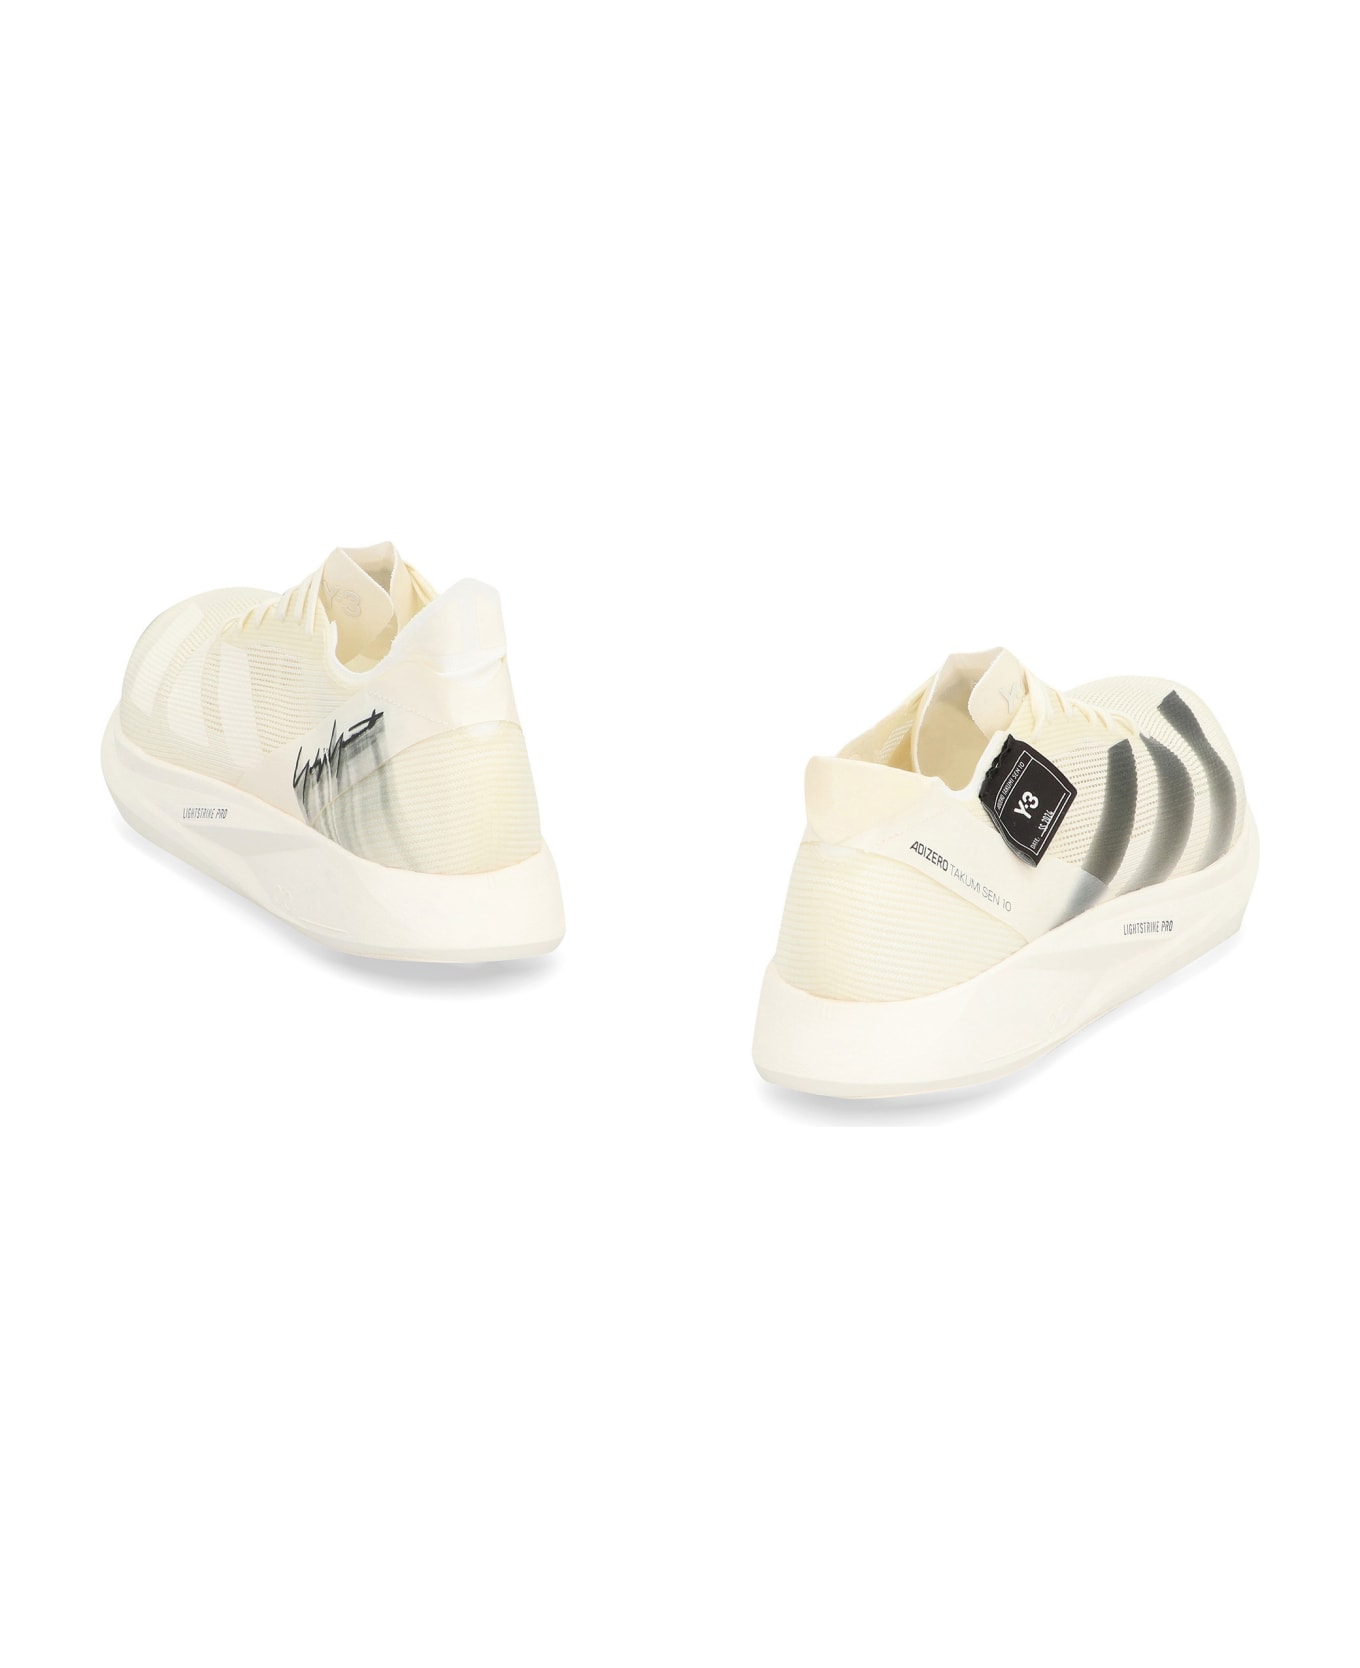 Y-3 Takumi Sen 10 Low-top Sneakers - Ivory